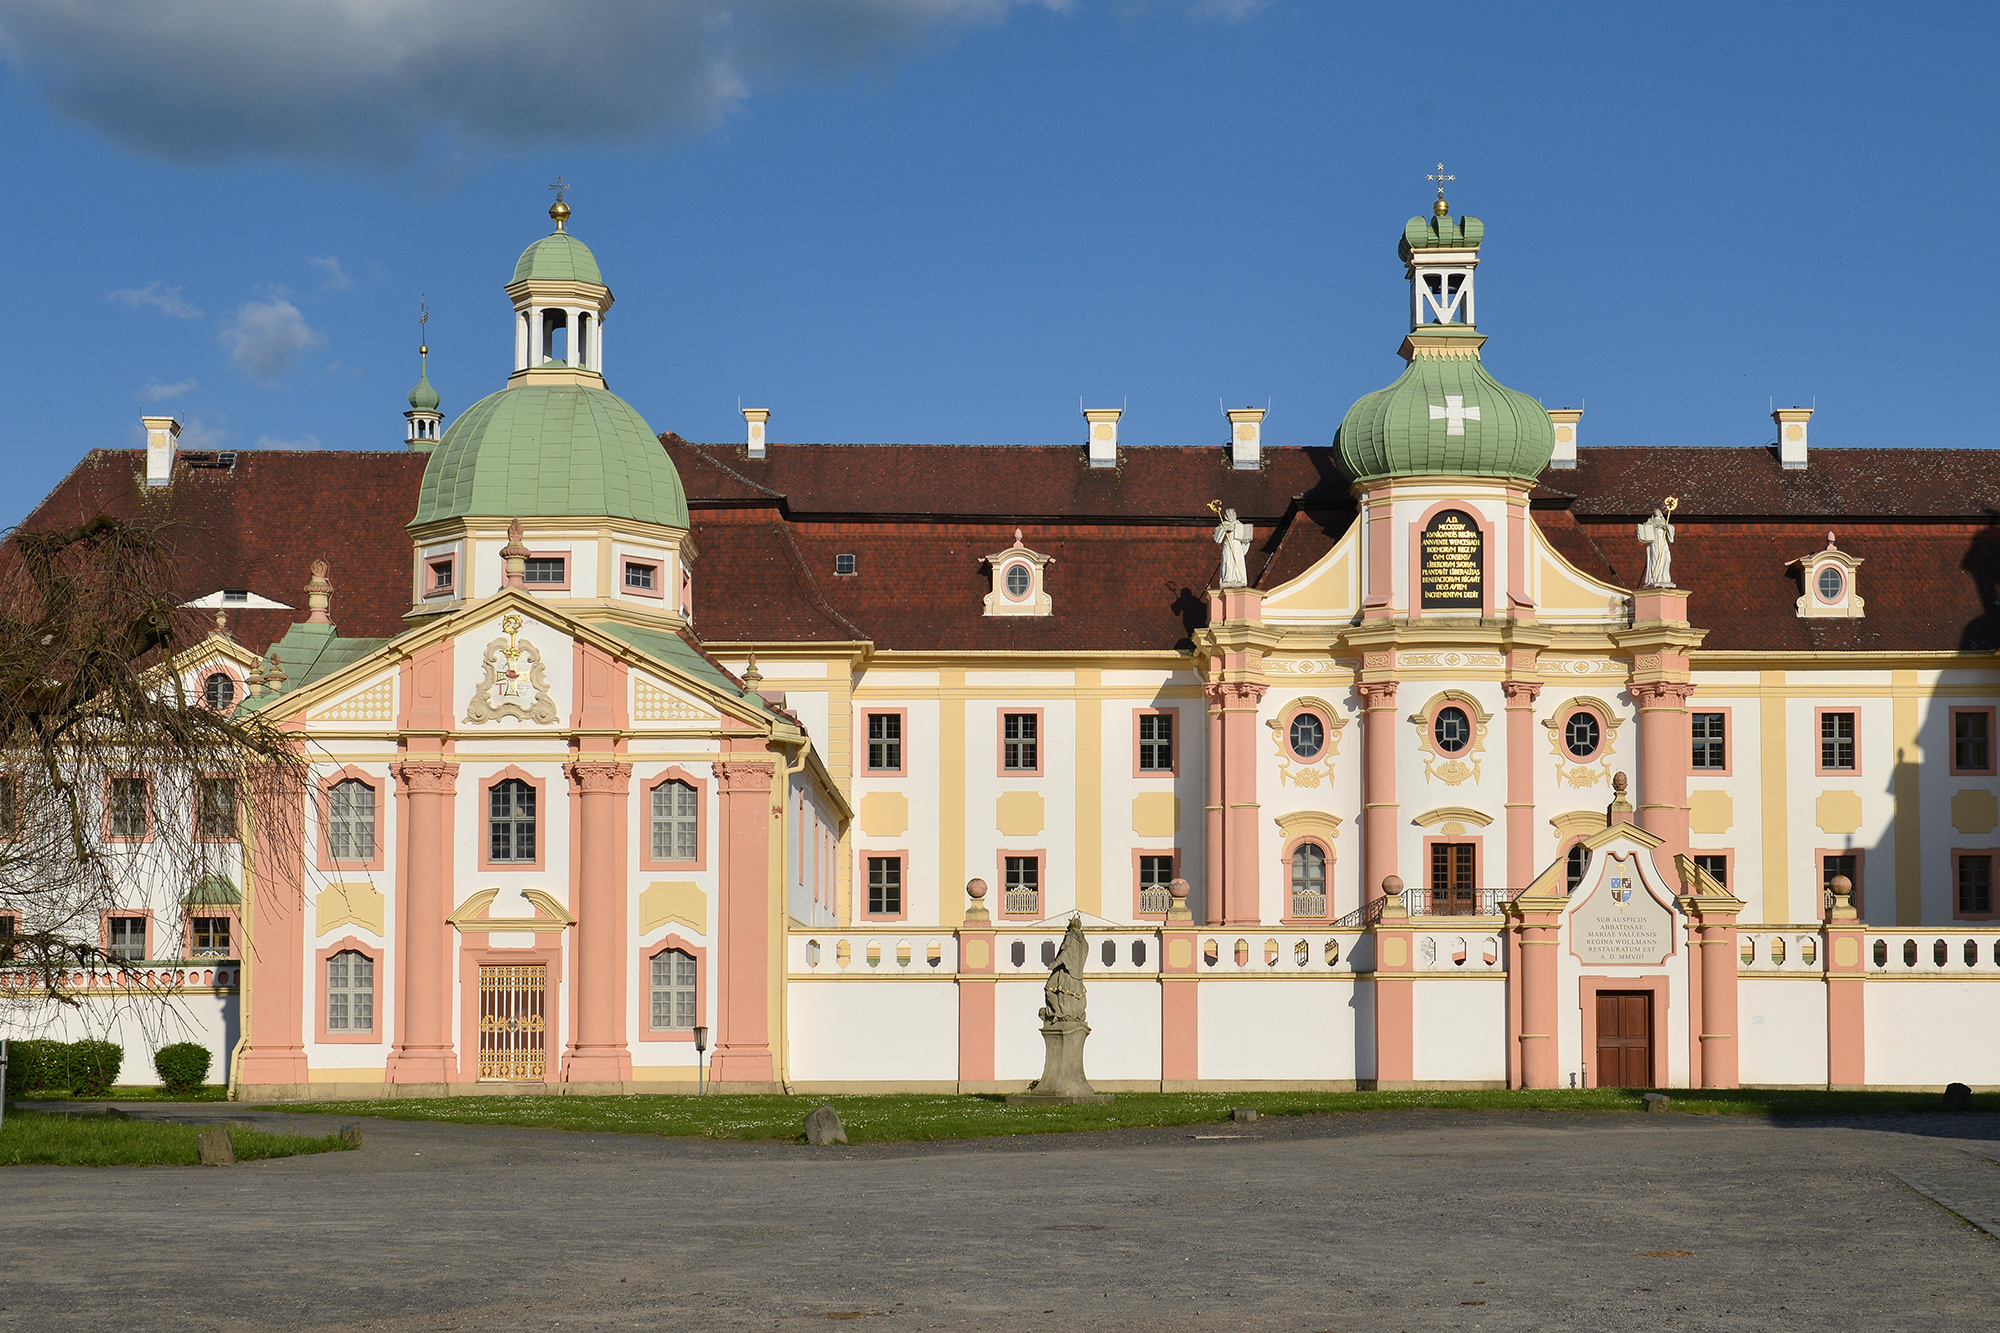 Kloster St. Marienthal